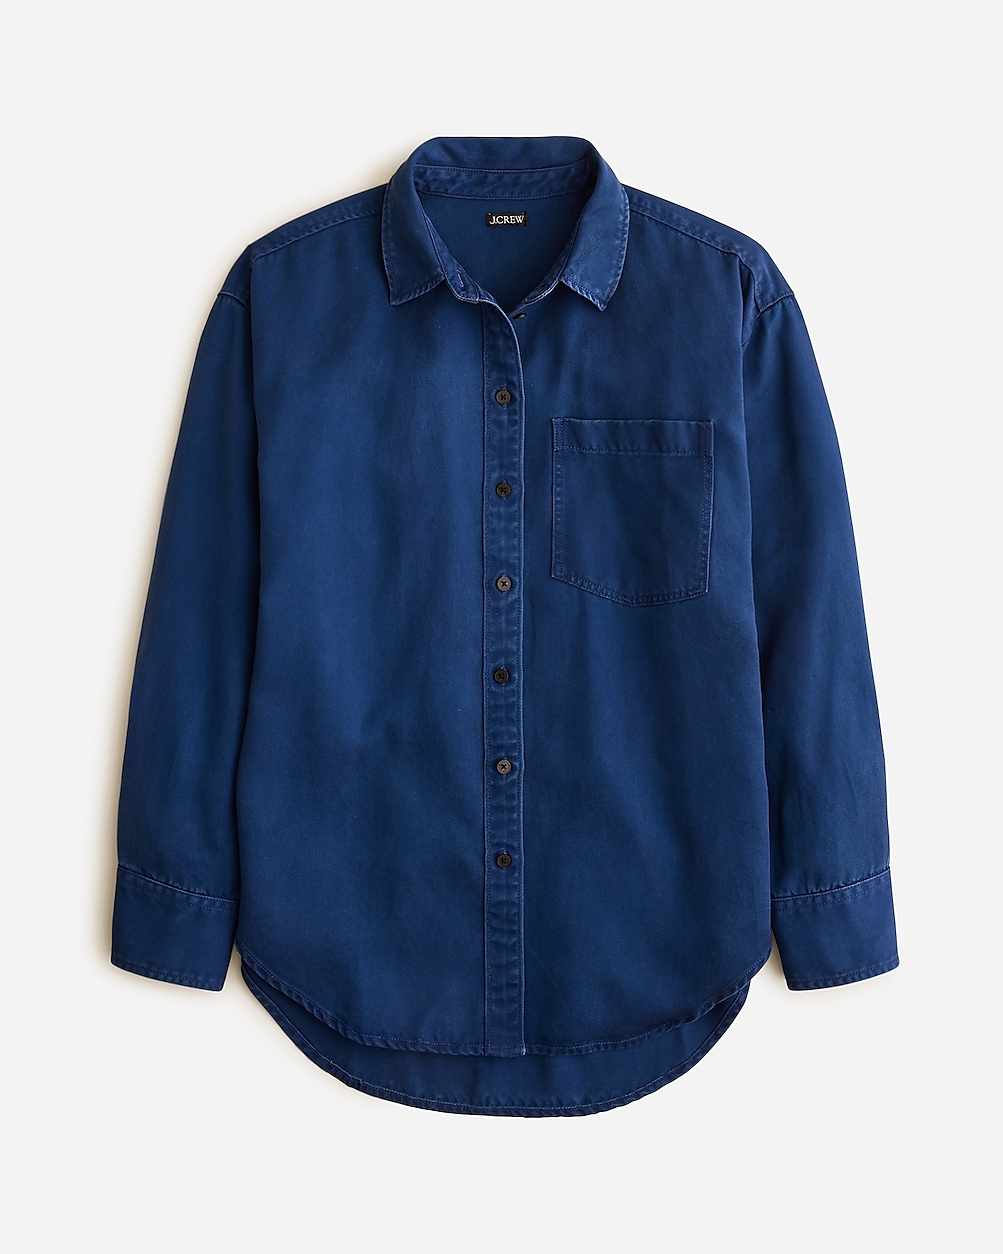 Etienne shirt in blue twill